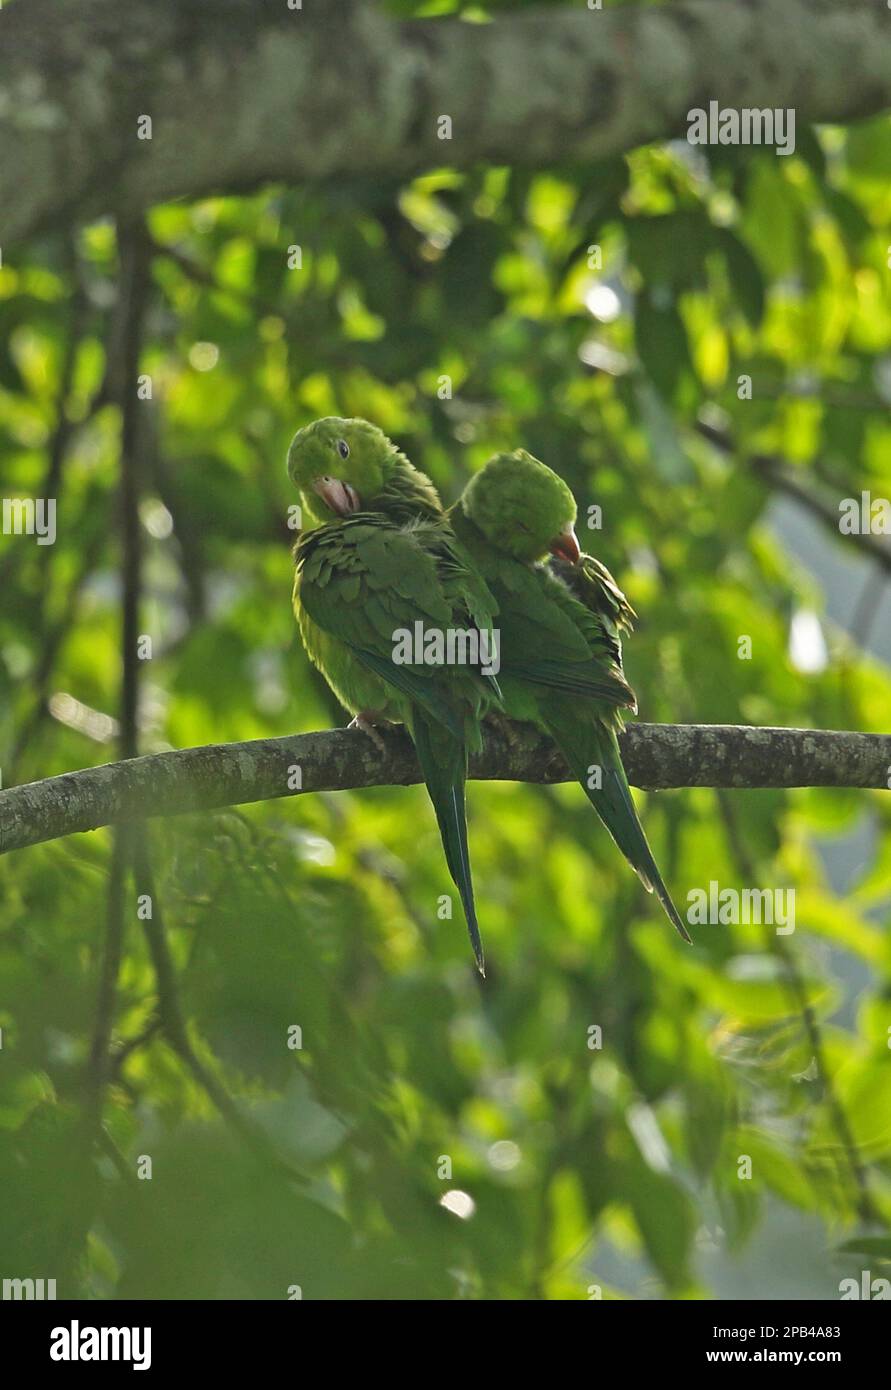 Plain parakeet (Brotogeris tirica) two adults preening, sitting on a branch, Atlantic rainforest, Reserva Ecologica de Guapi Assu, Rio de Janeiro stat Stock Photo